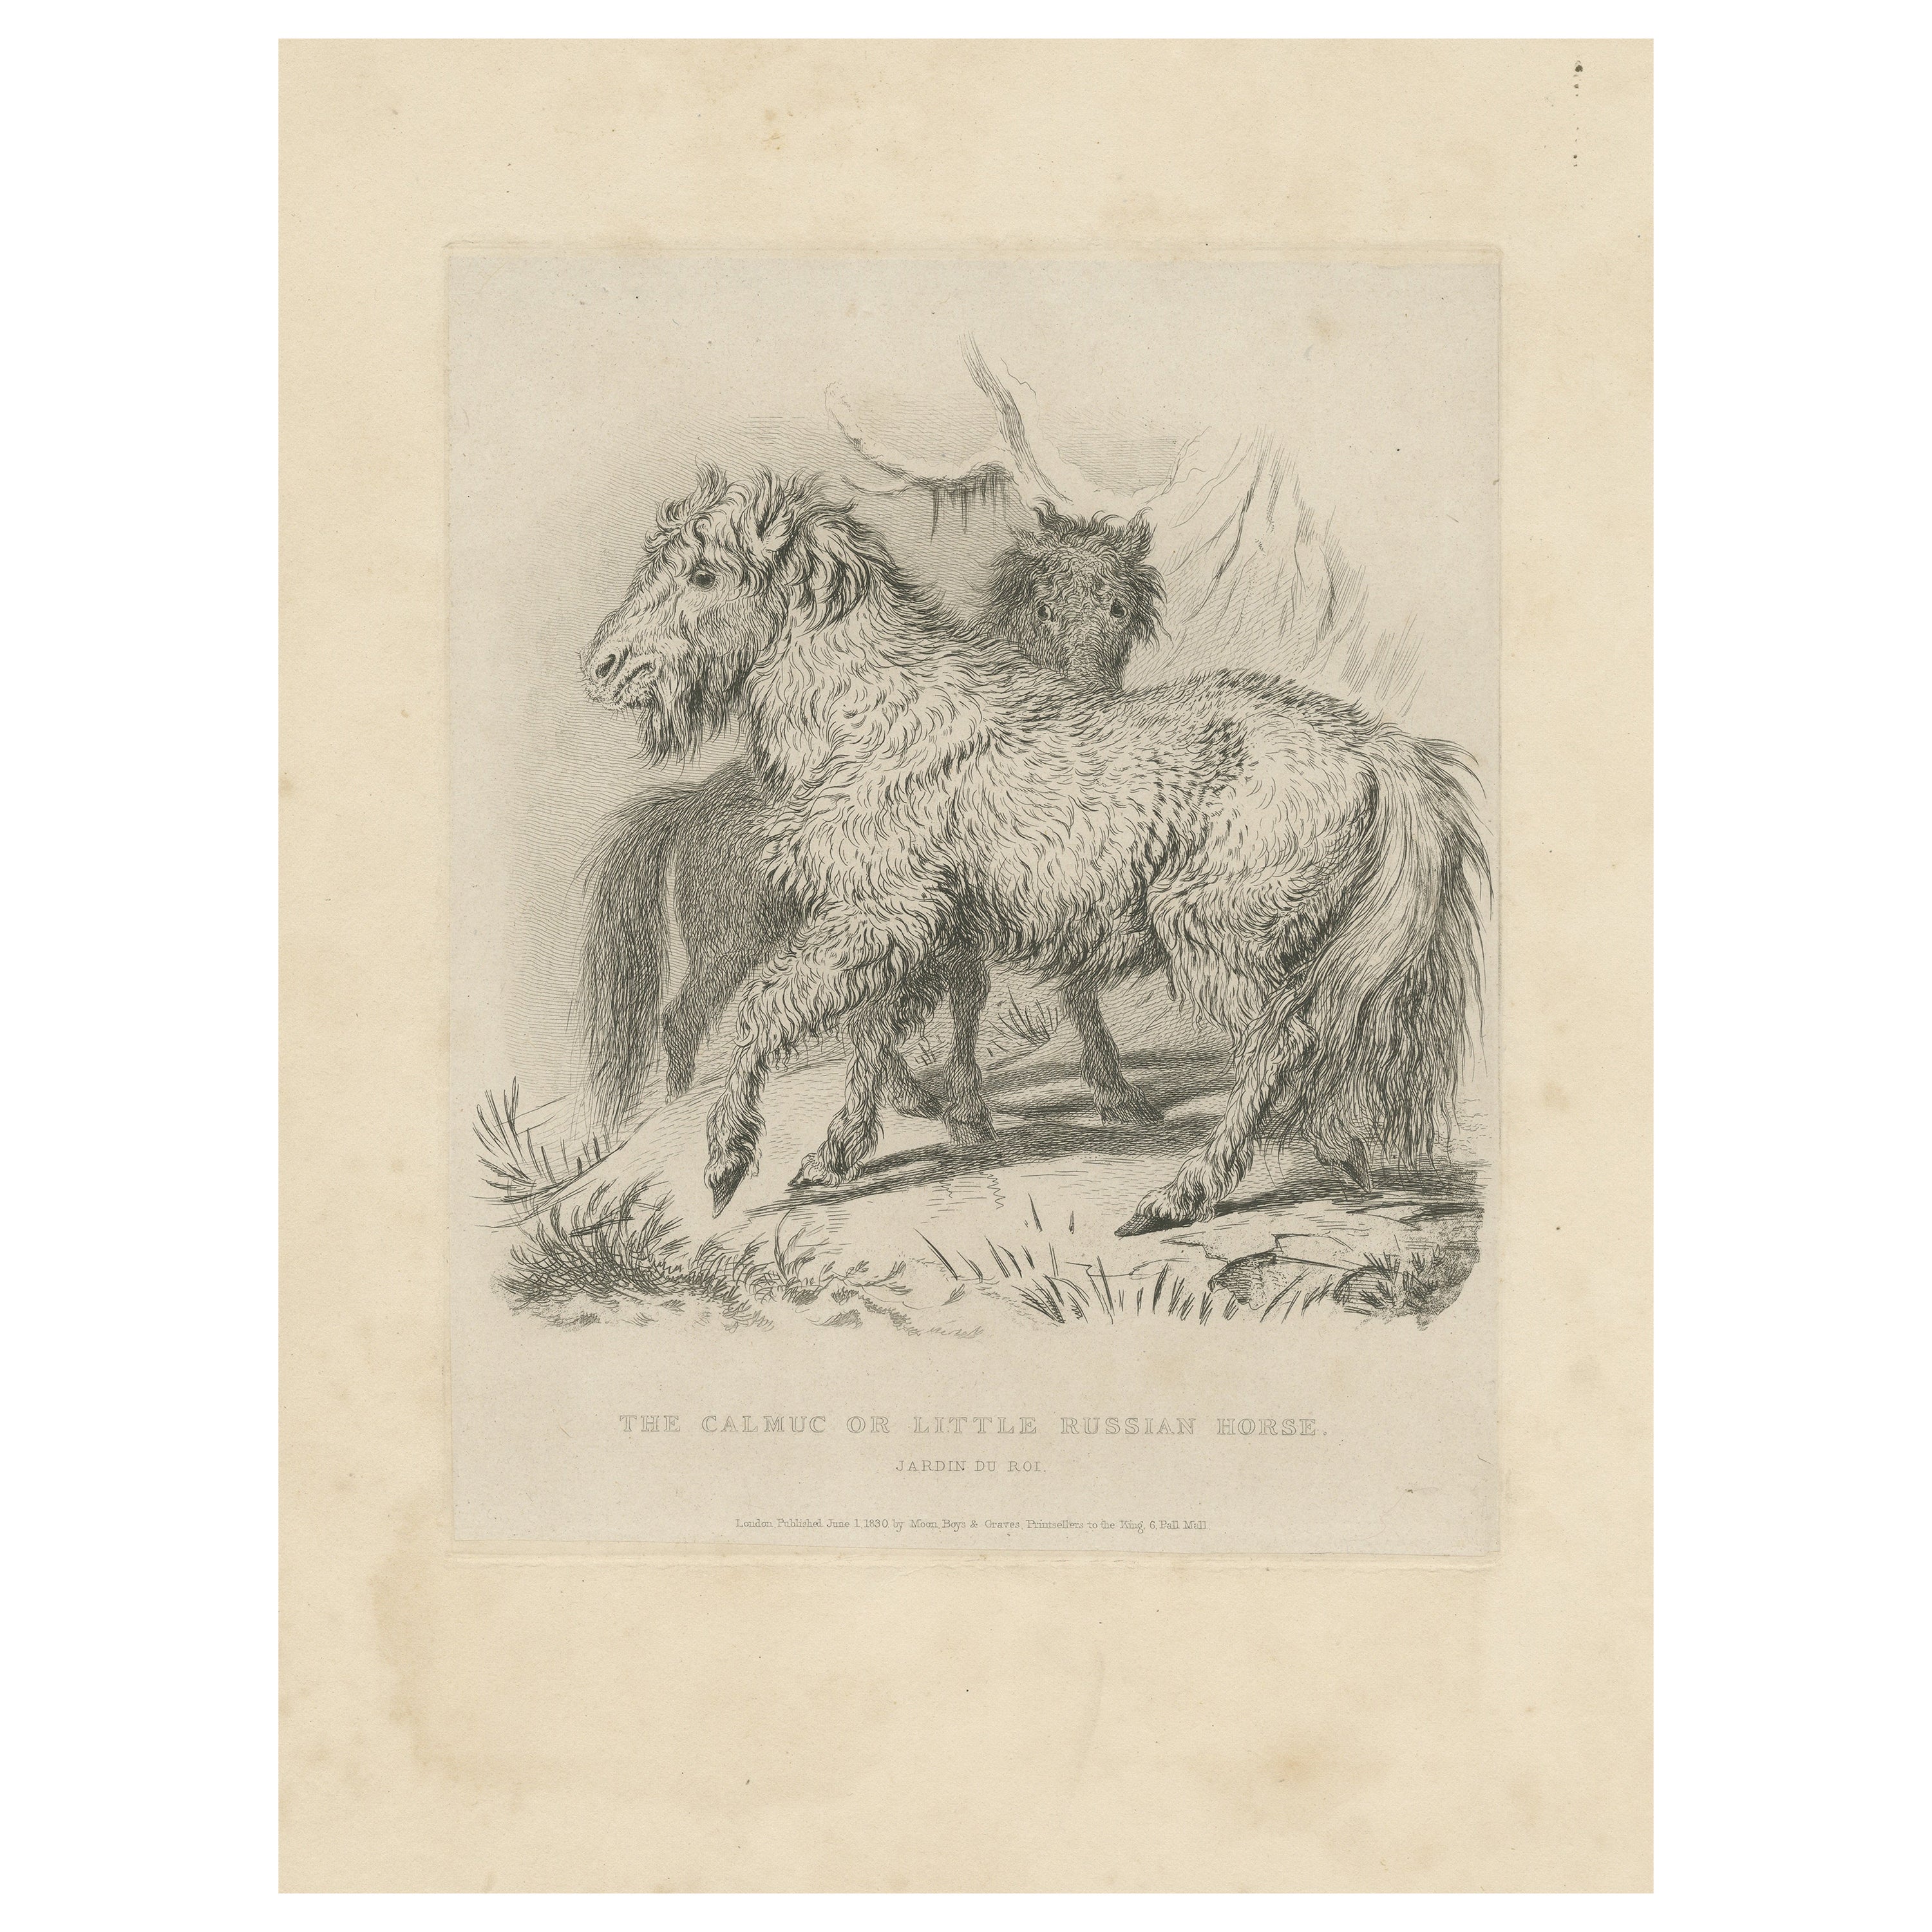 Antique Animal Print of a Calmuc or Little Russian Horse